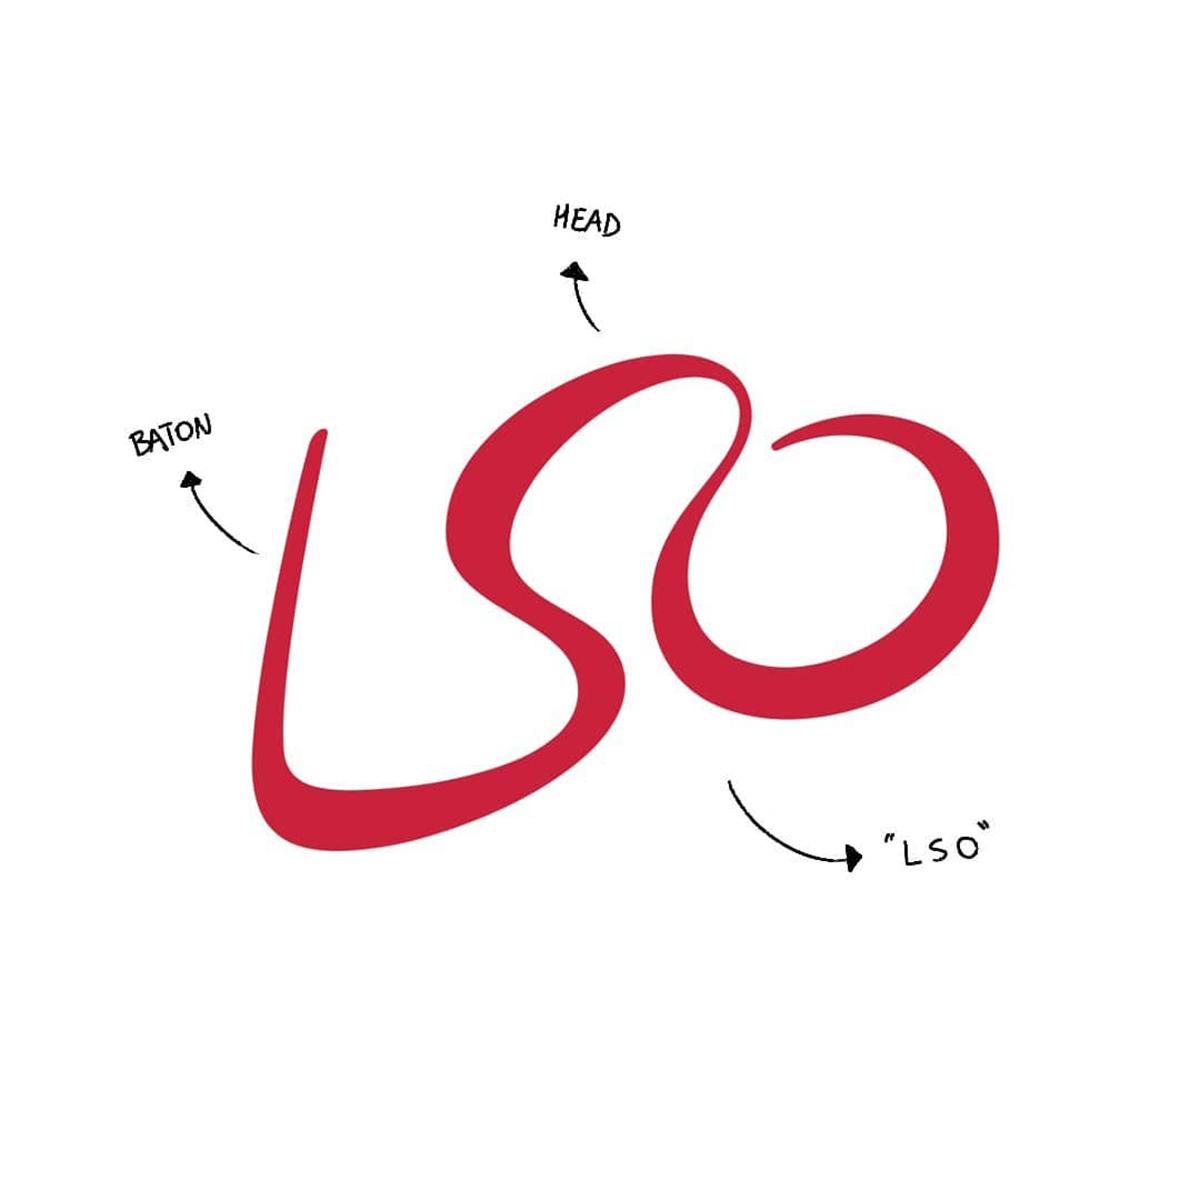 Blogduwebdesign inpiration graphisme decrypte logo lso